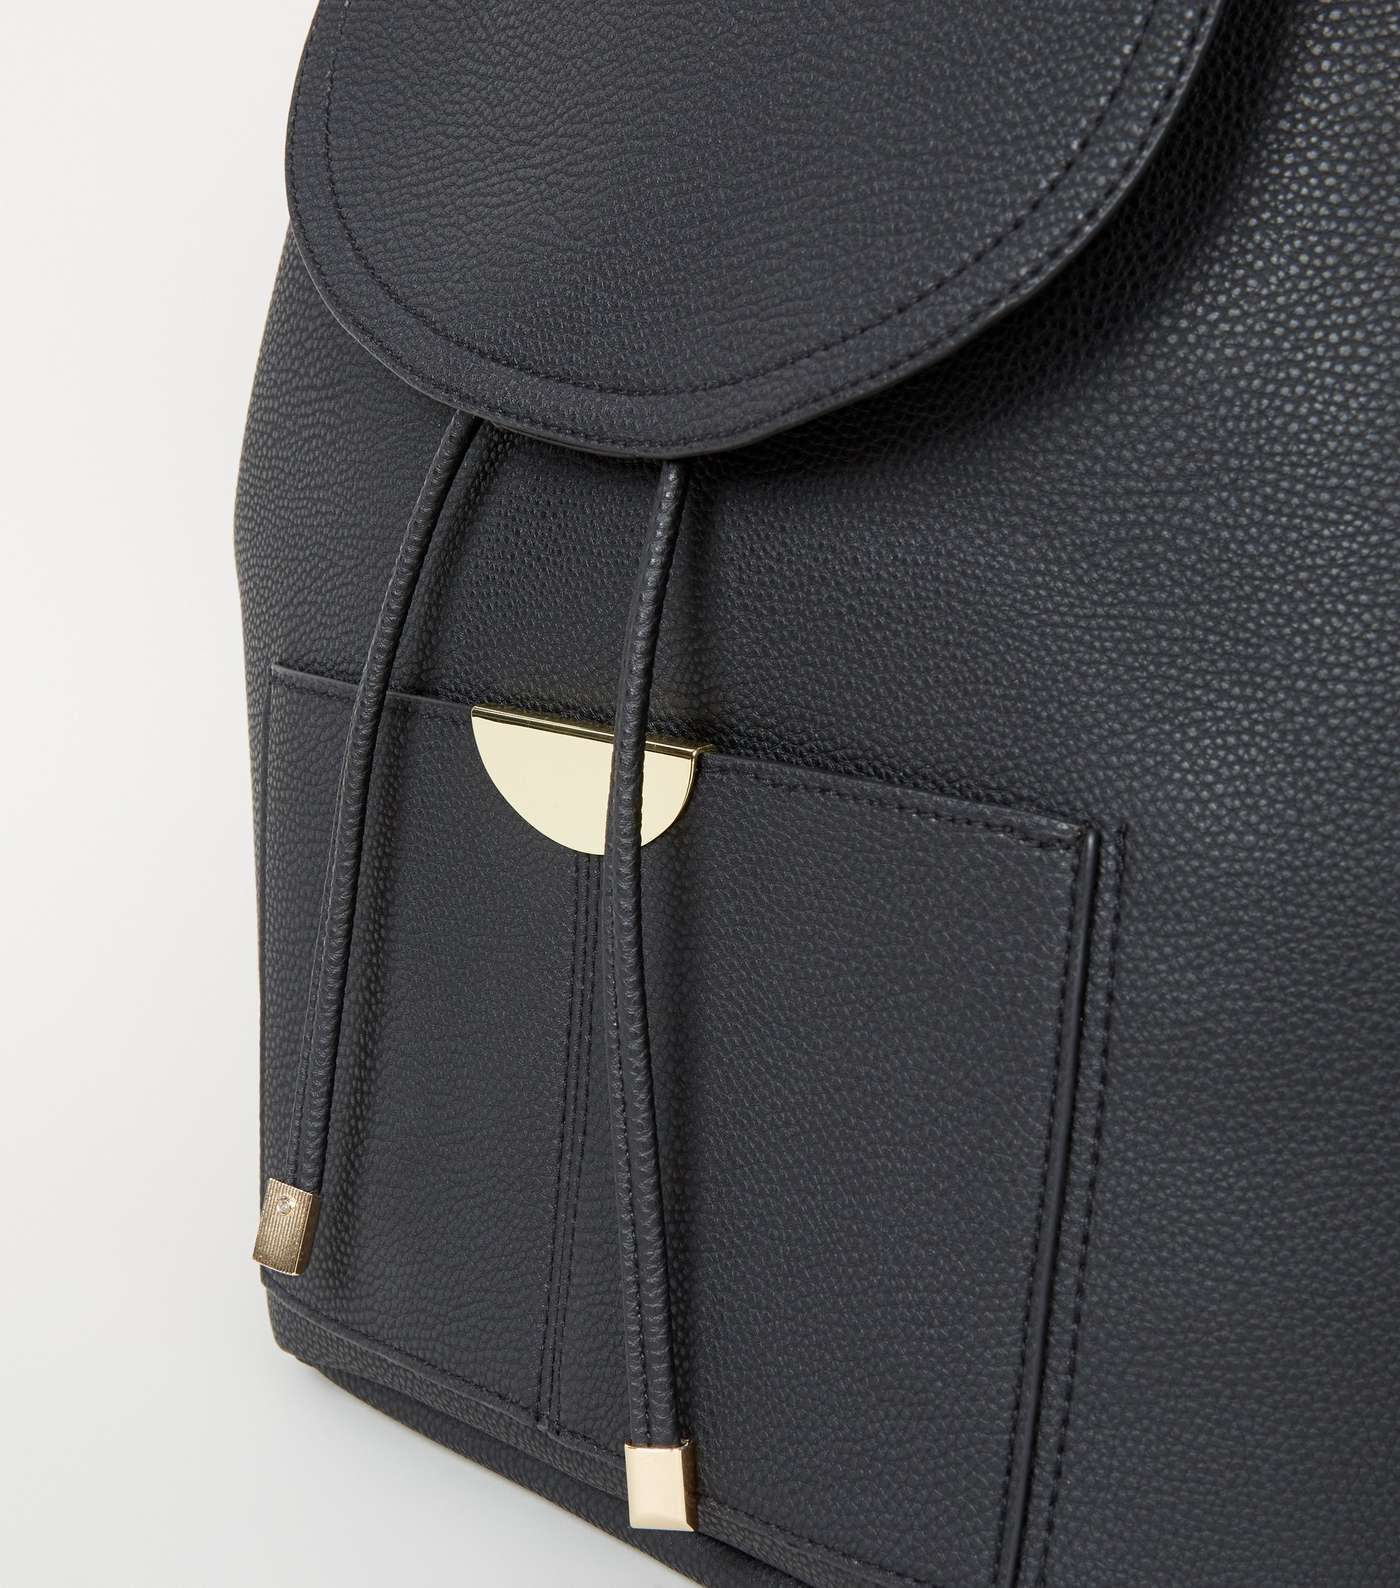 Black Leather-Look Drawstring Backpack Image 3